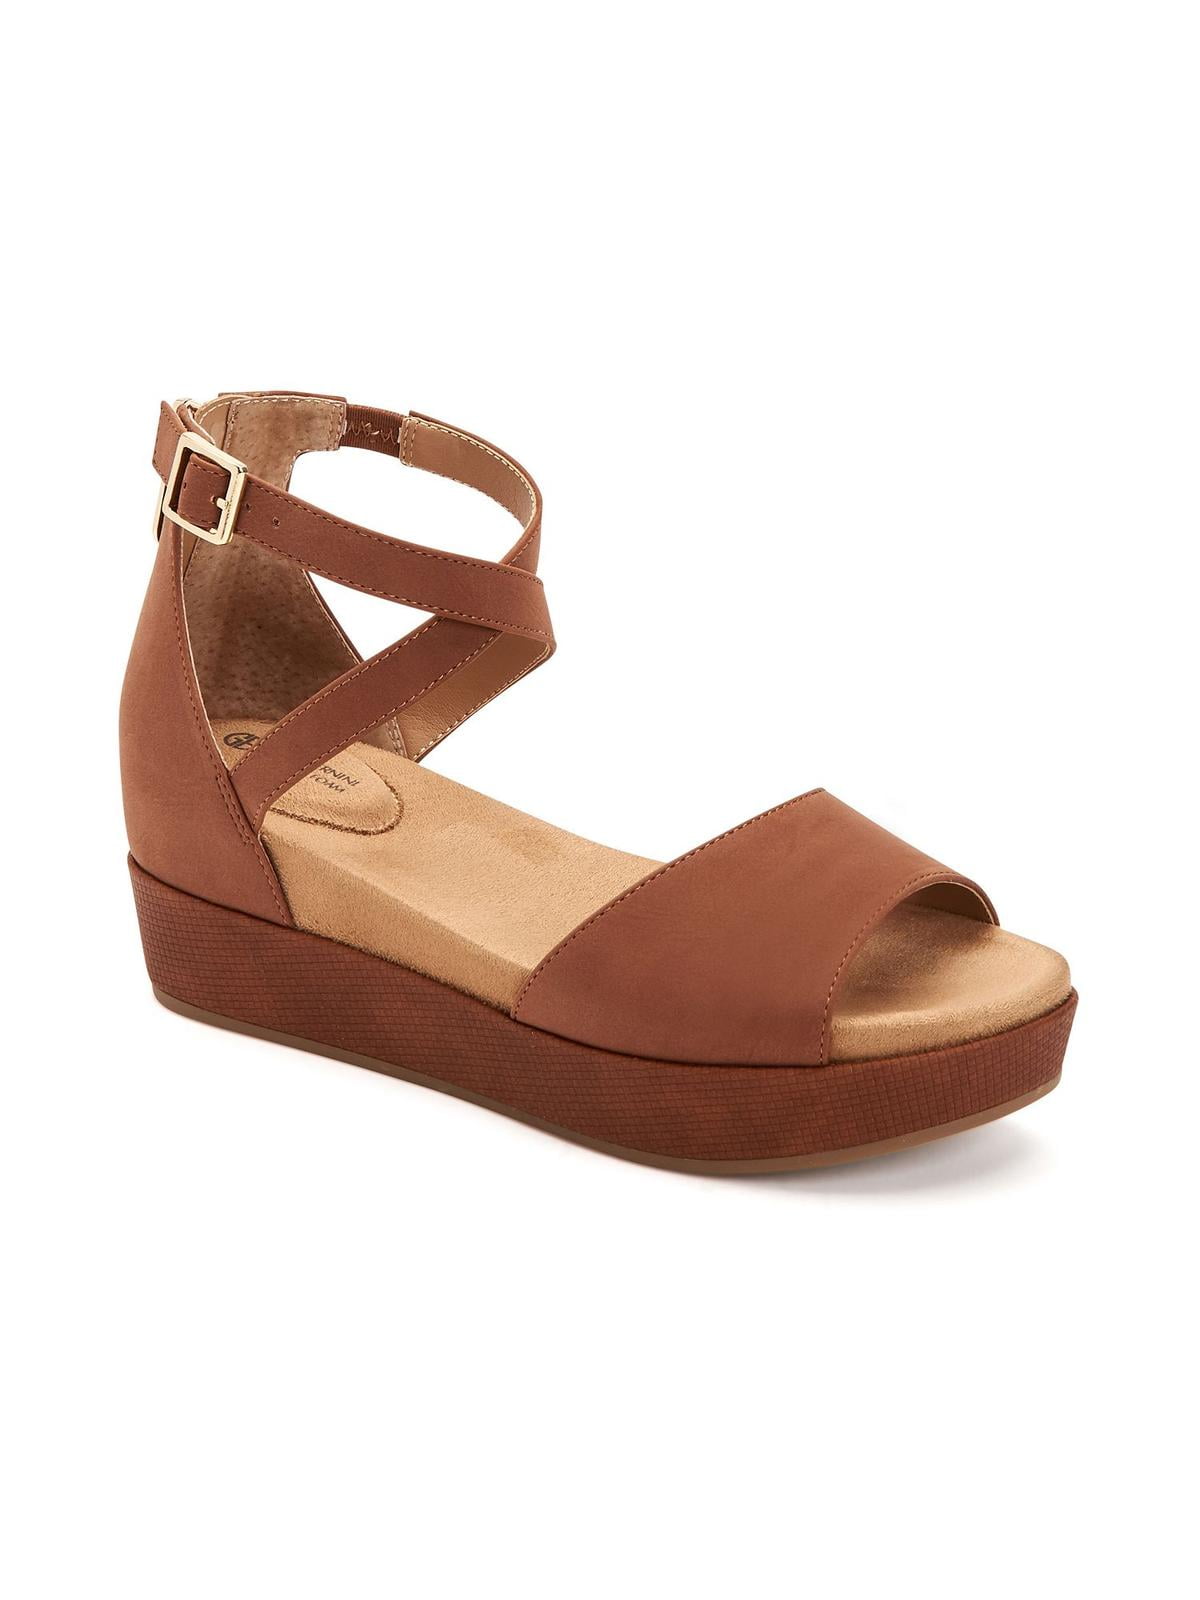 Giani Bernini Womens Ellenaa Nubuck Ankle Strap Wedge Sandals - Walmart.com